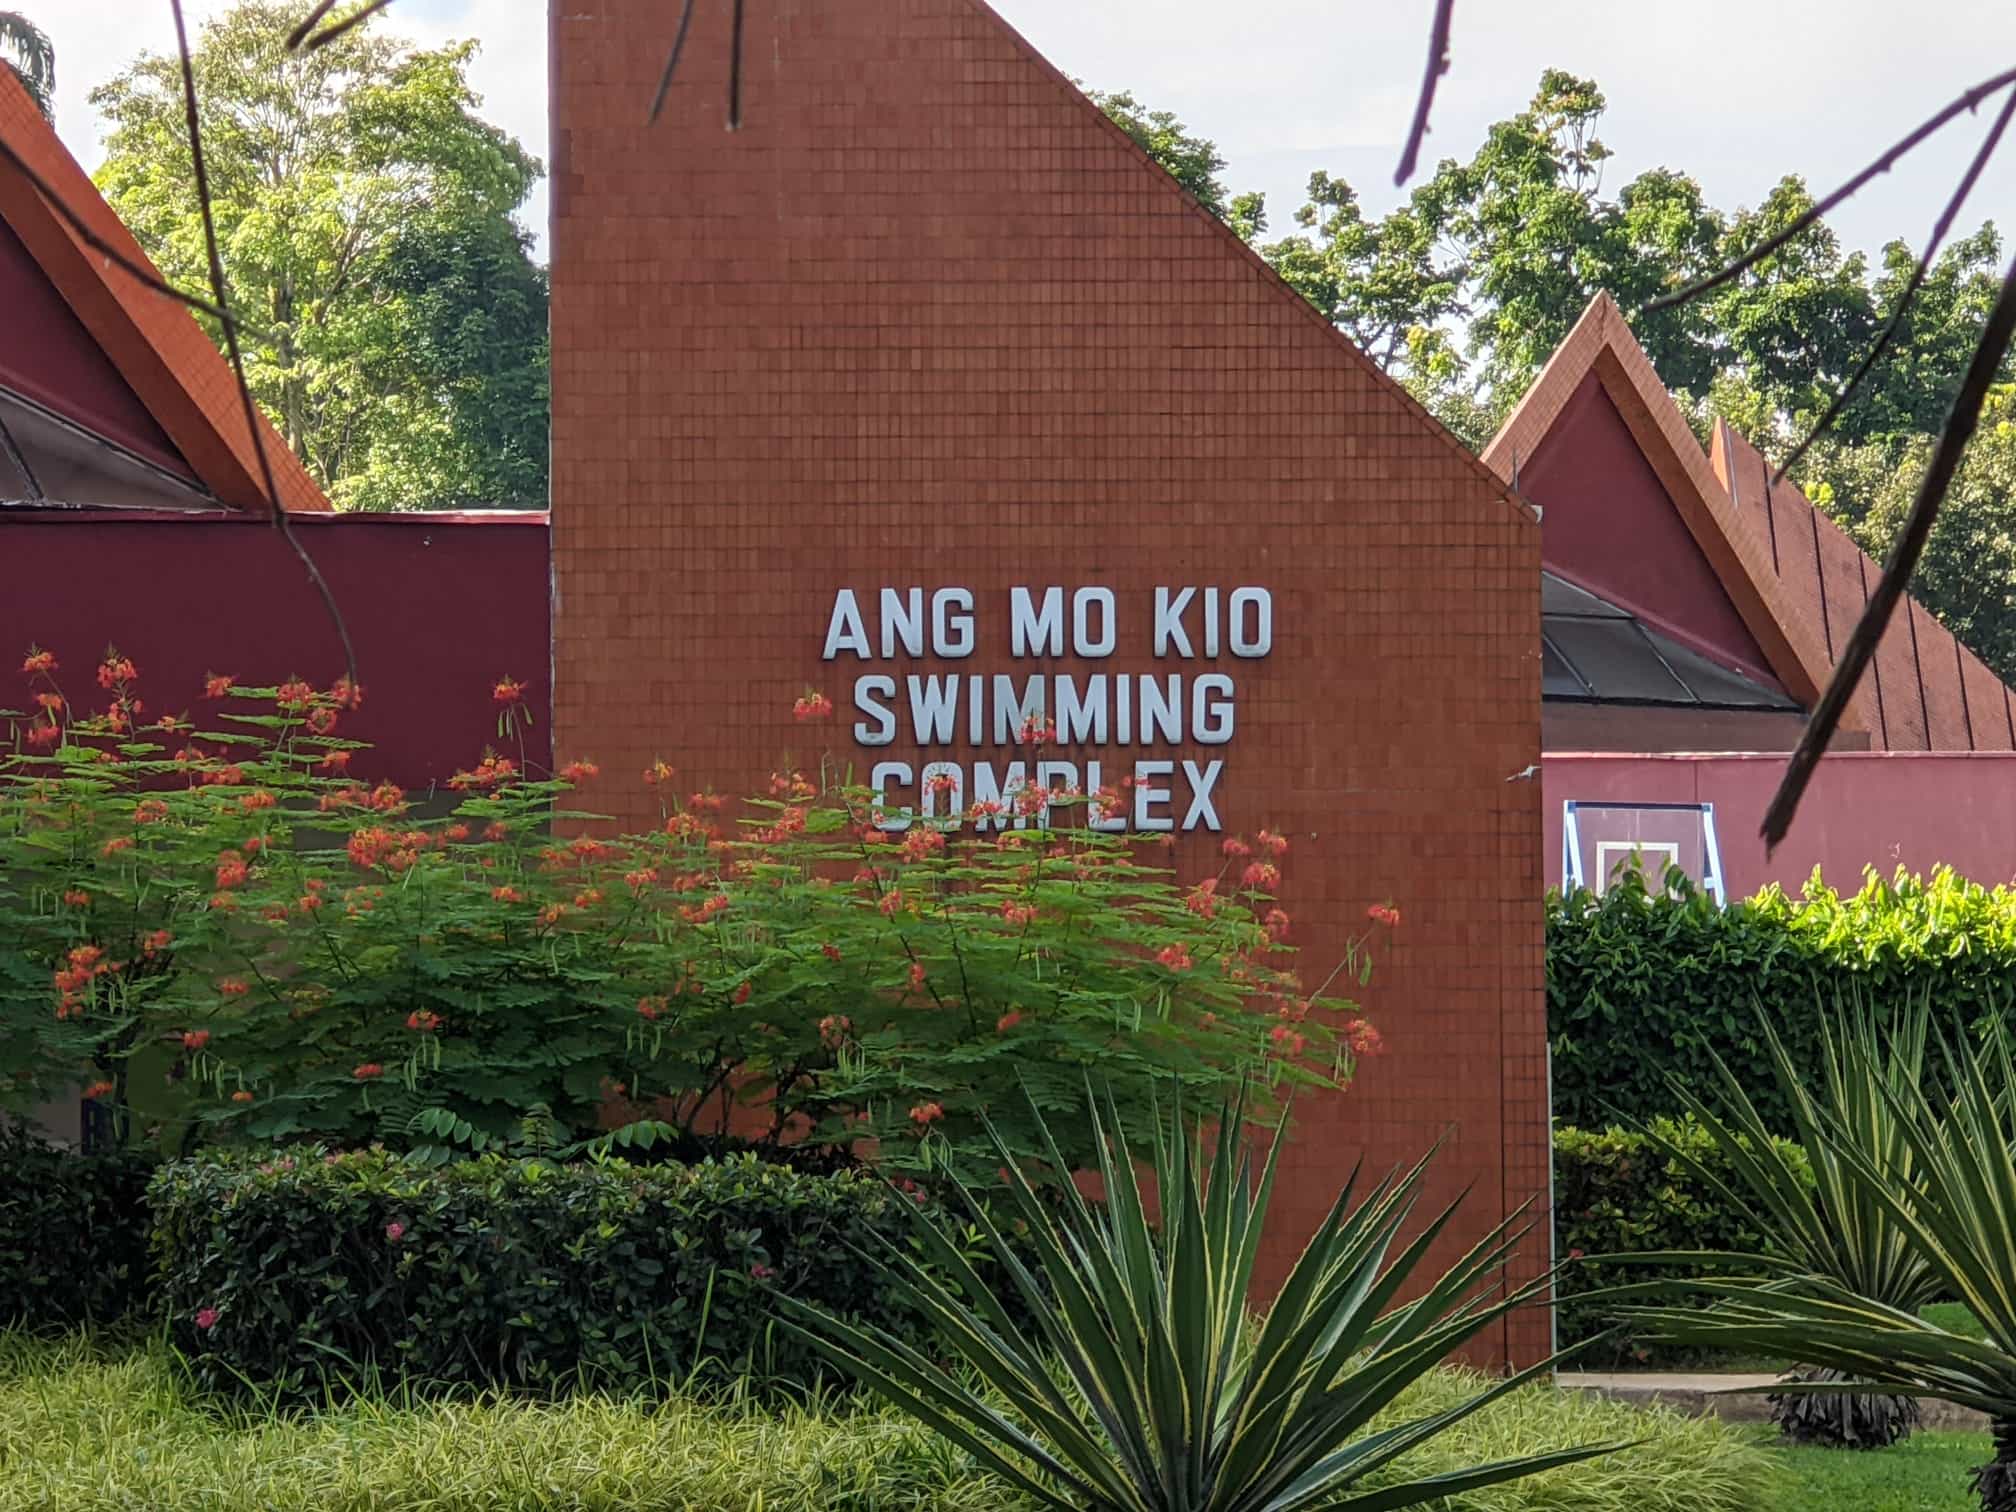 Main Gate - Ang Mo Kio Swimming Complex